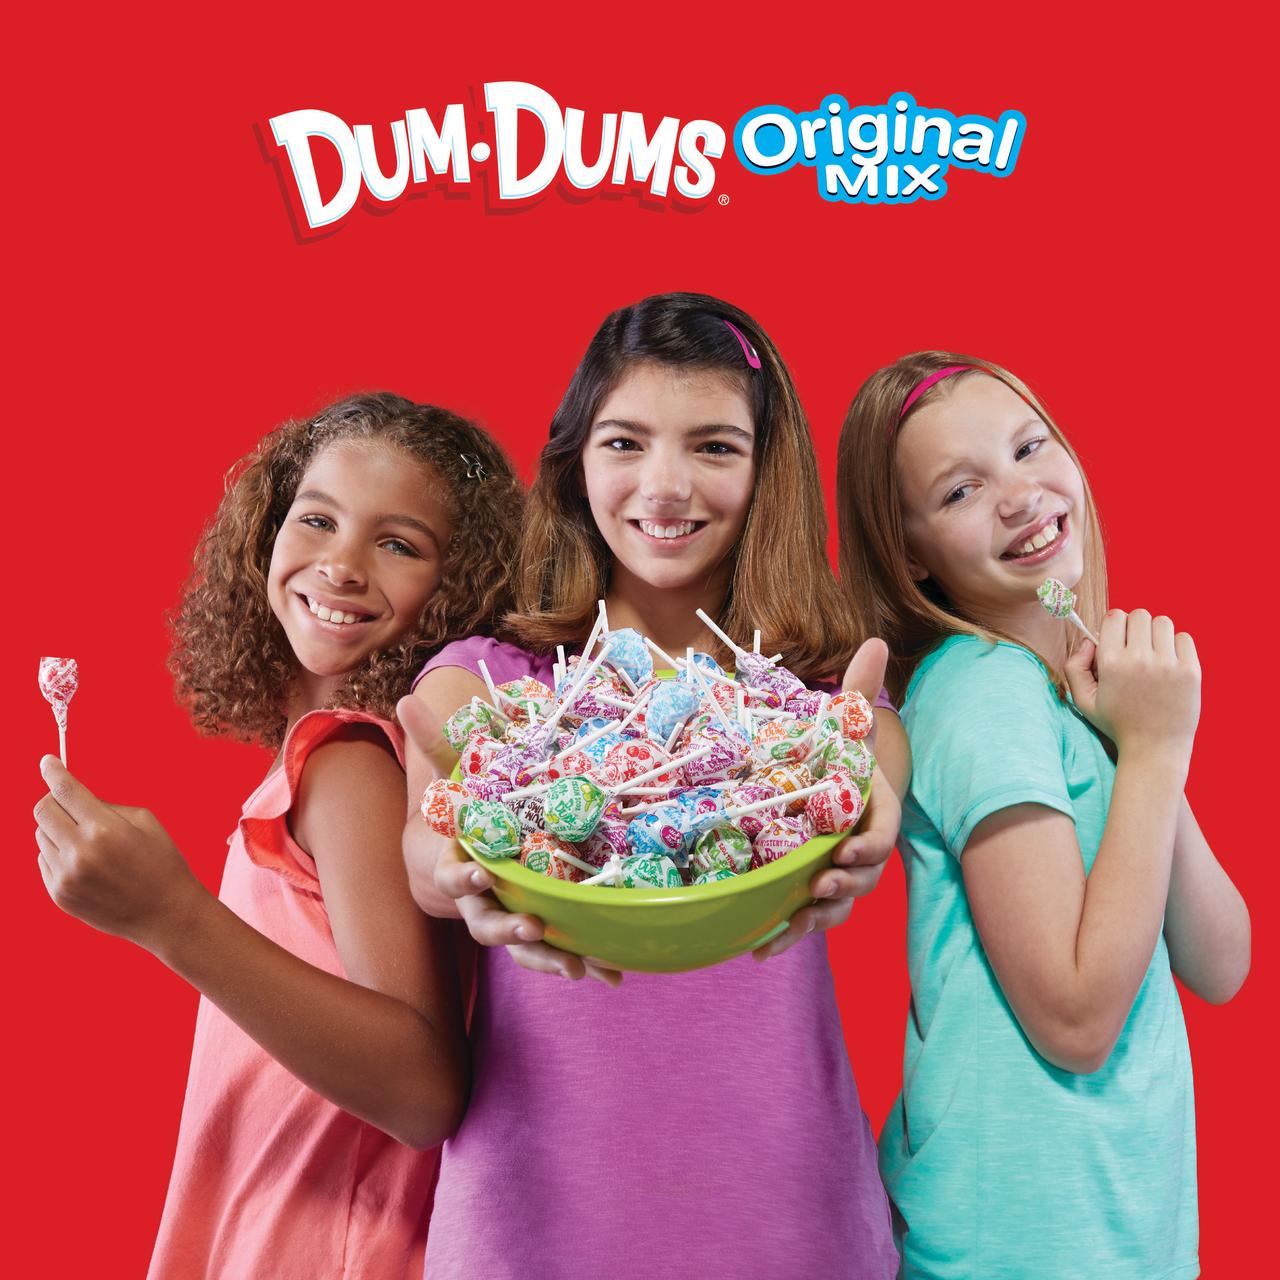 Dum Dums Free of Major Allergens Original Flavor Mix Lollipops, Party Candy, 16 oz. Bag - image 6 of 8